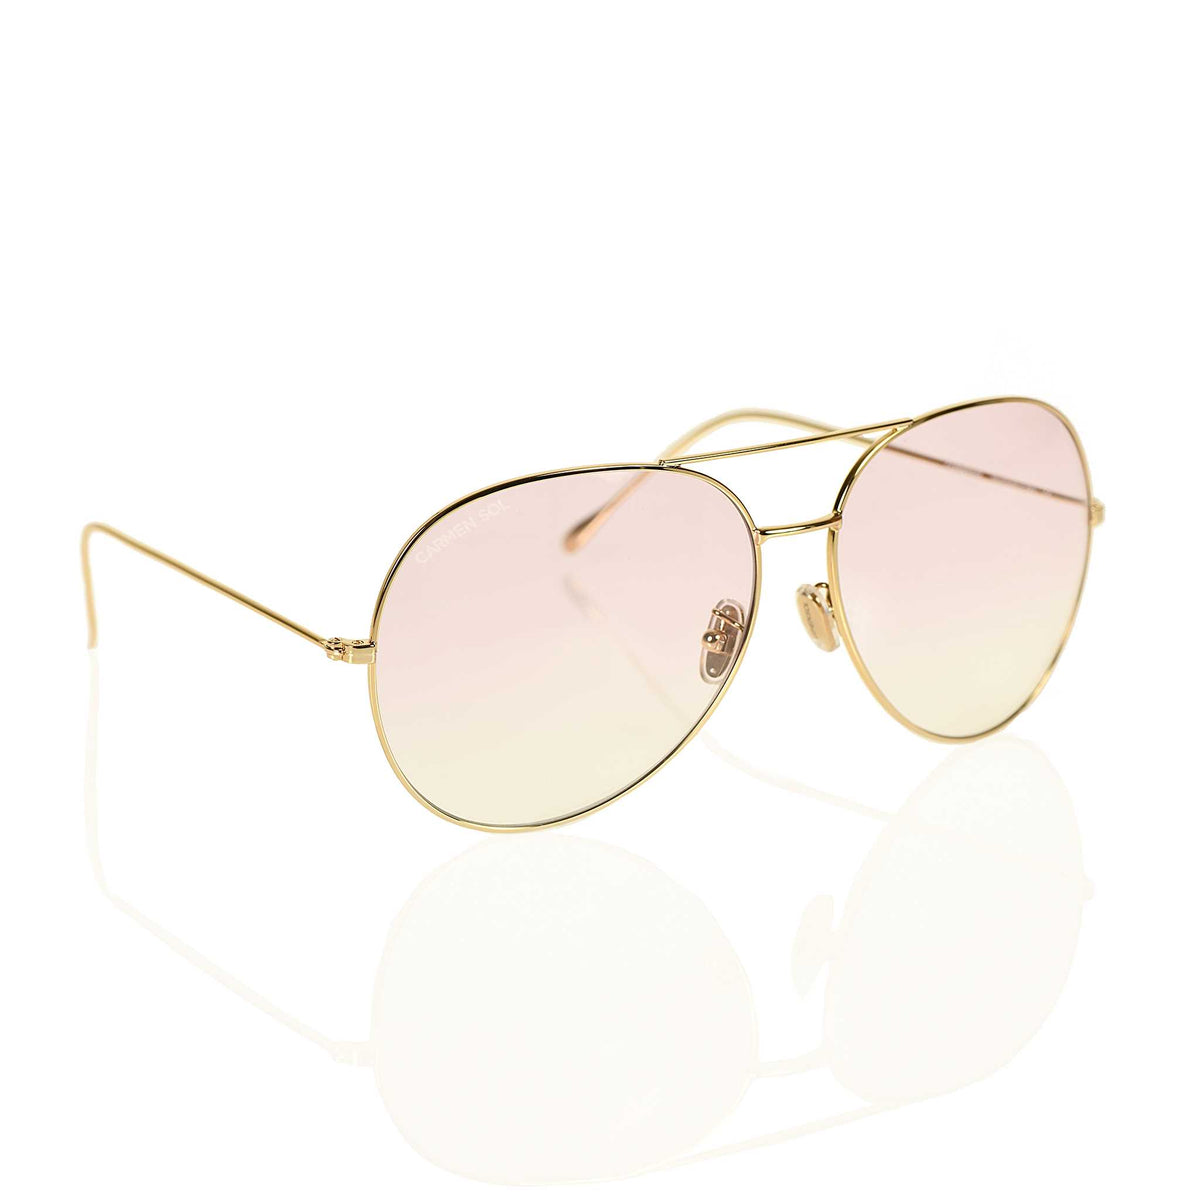 Gold aviator sunglasses for women with gradient lenses 